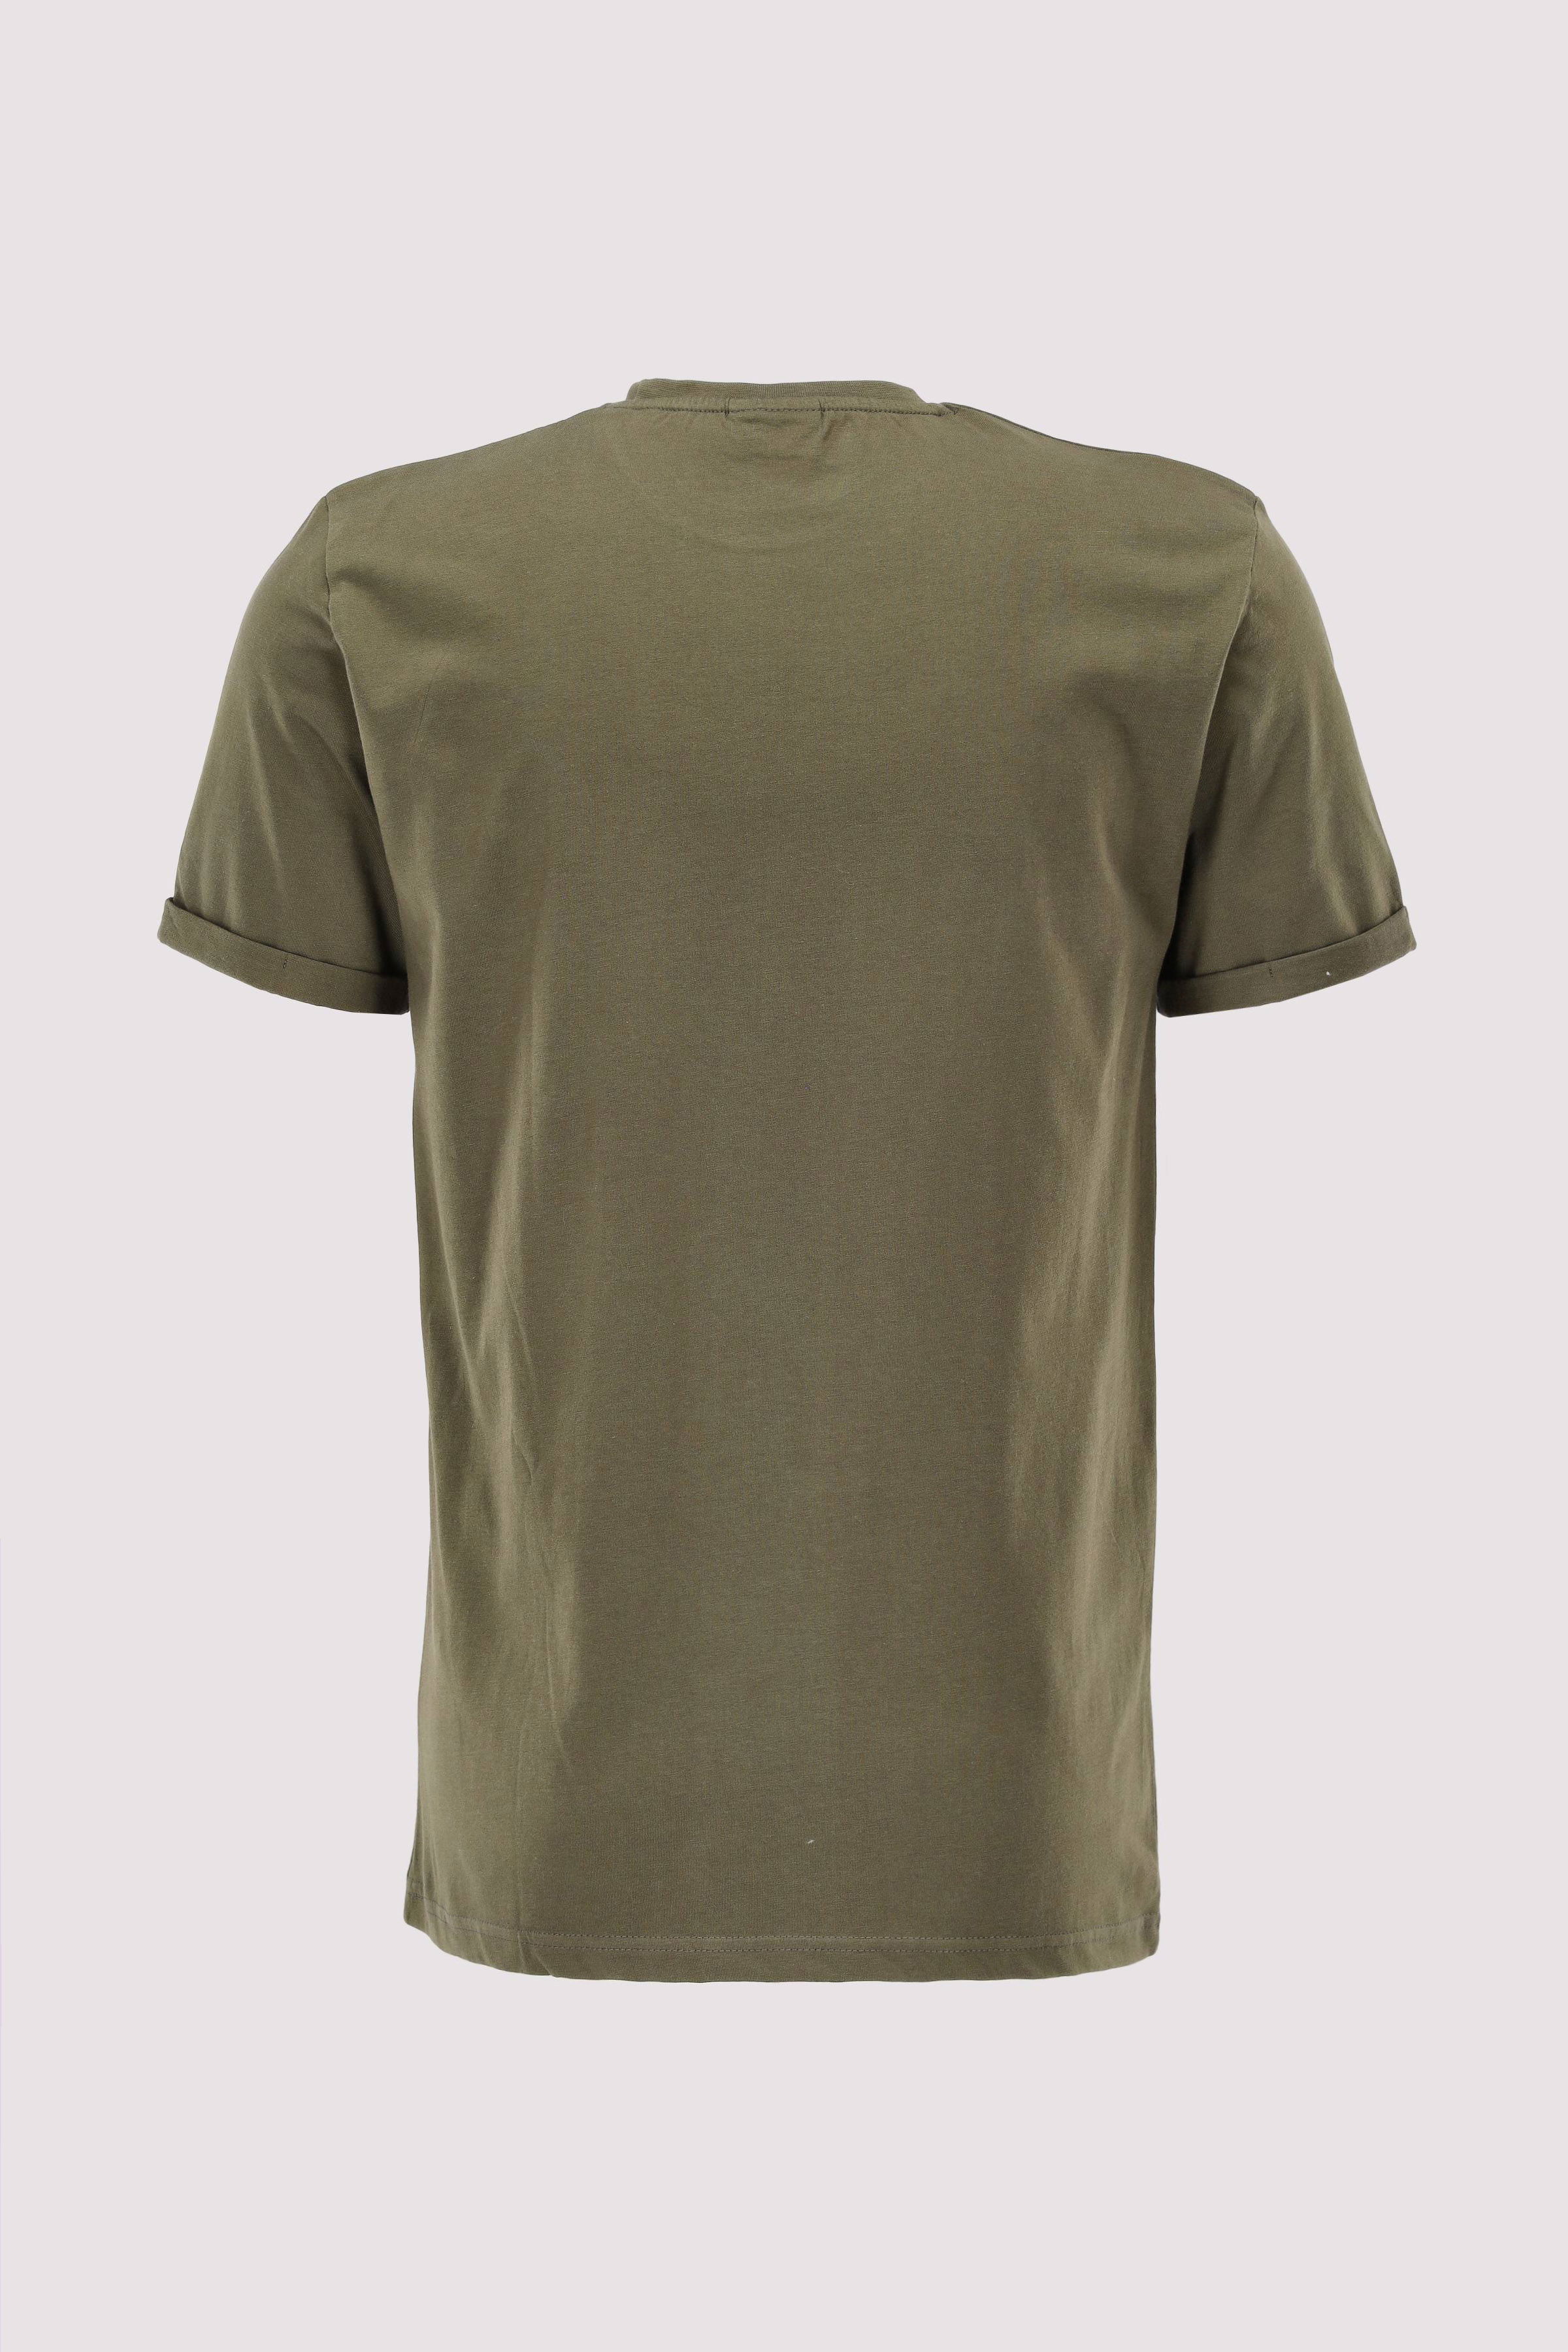 Norregaard T-Shirt Tonal